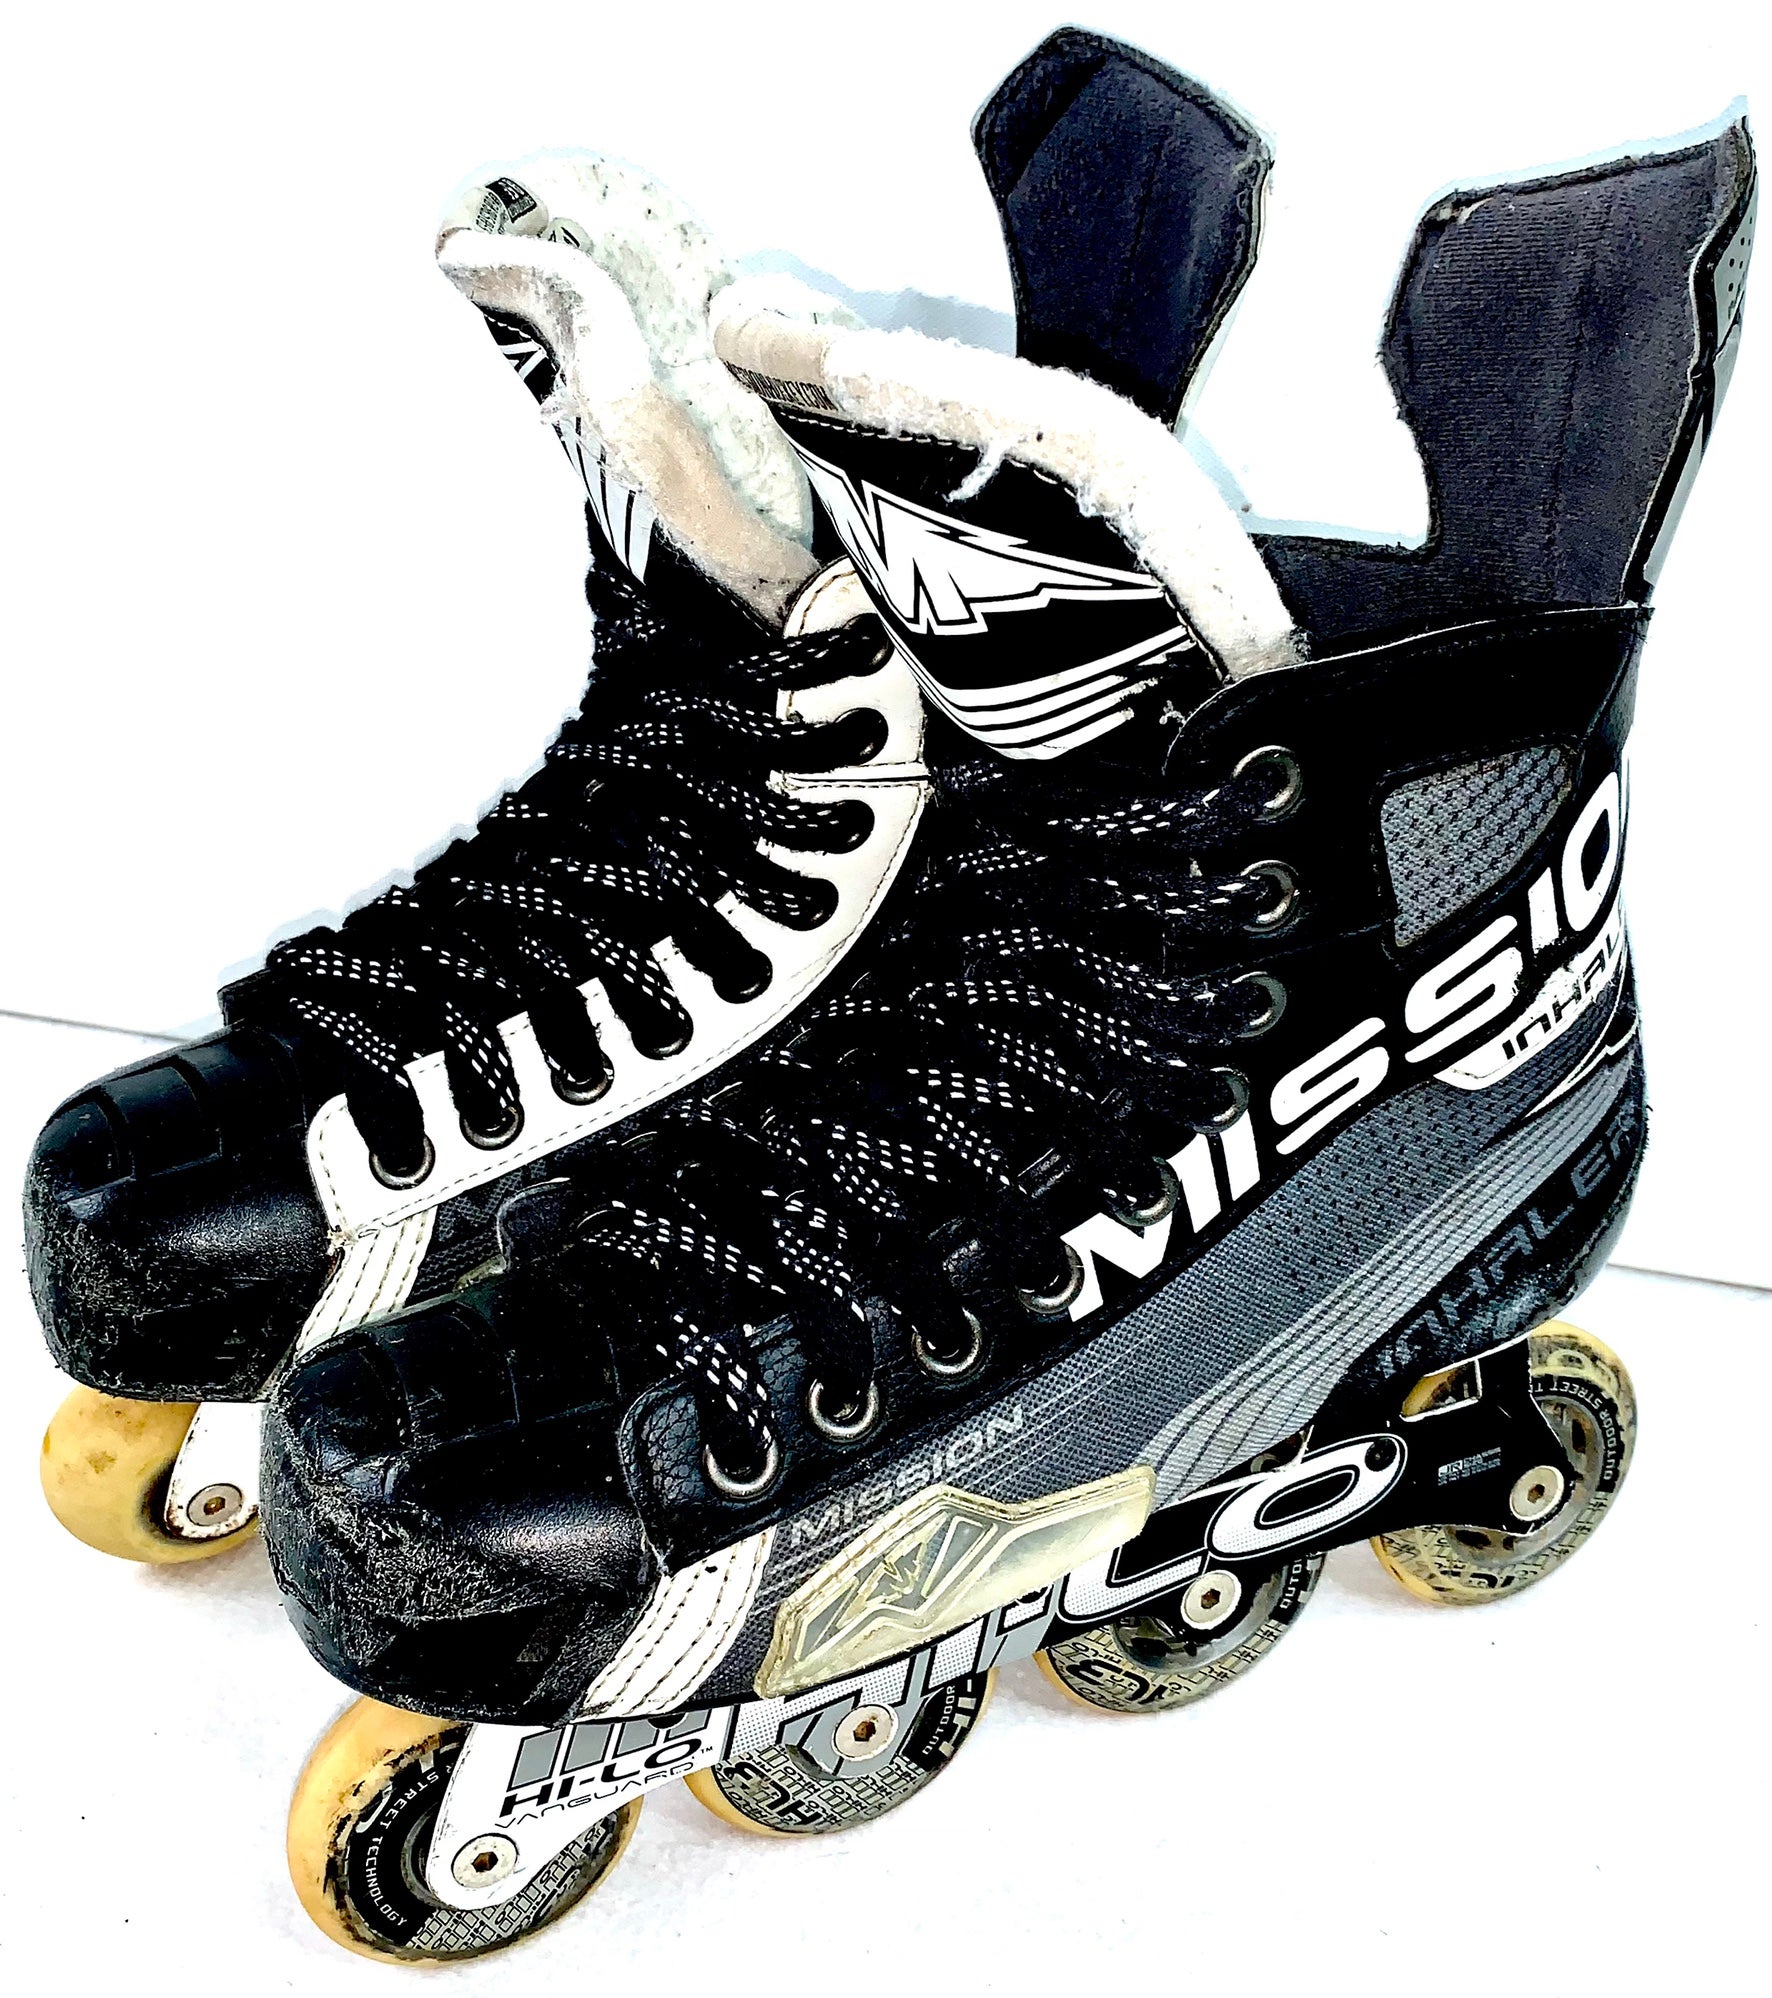 5 Women Details about   Mission Proto Si Inline Hockey Skates Roller Blades Size 4D US 4 Shoe M 